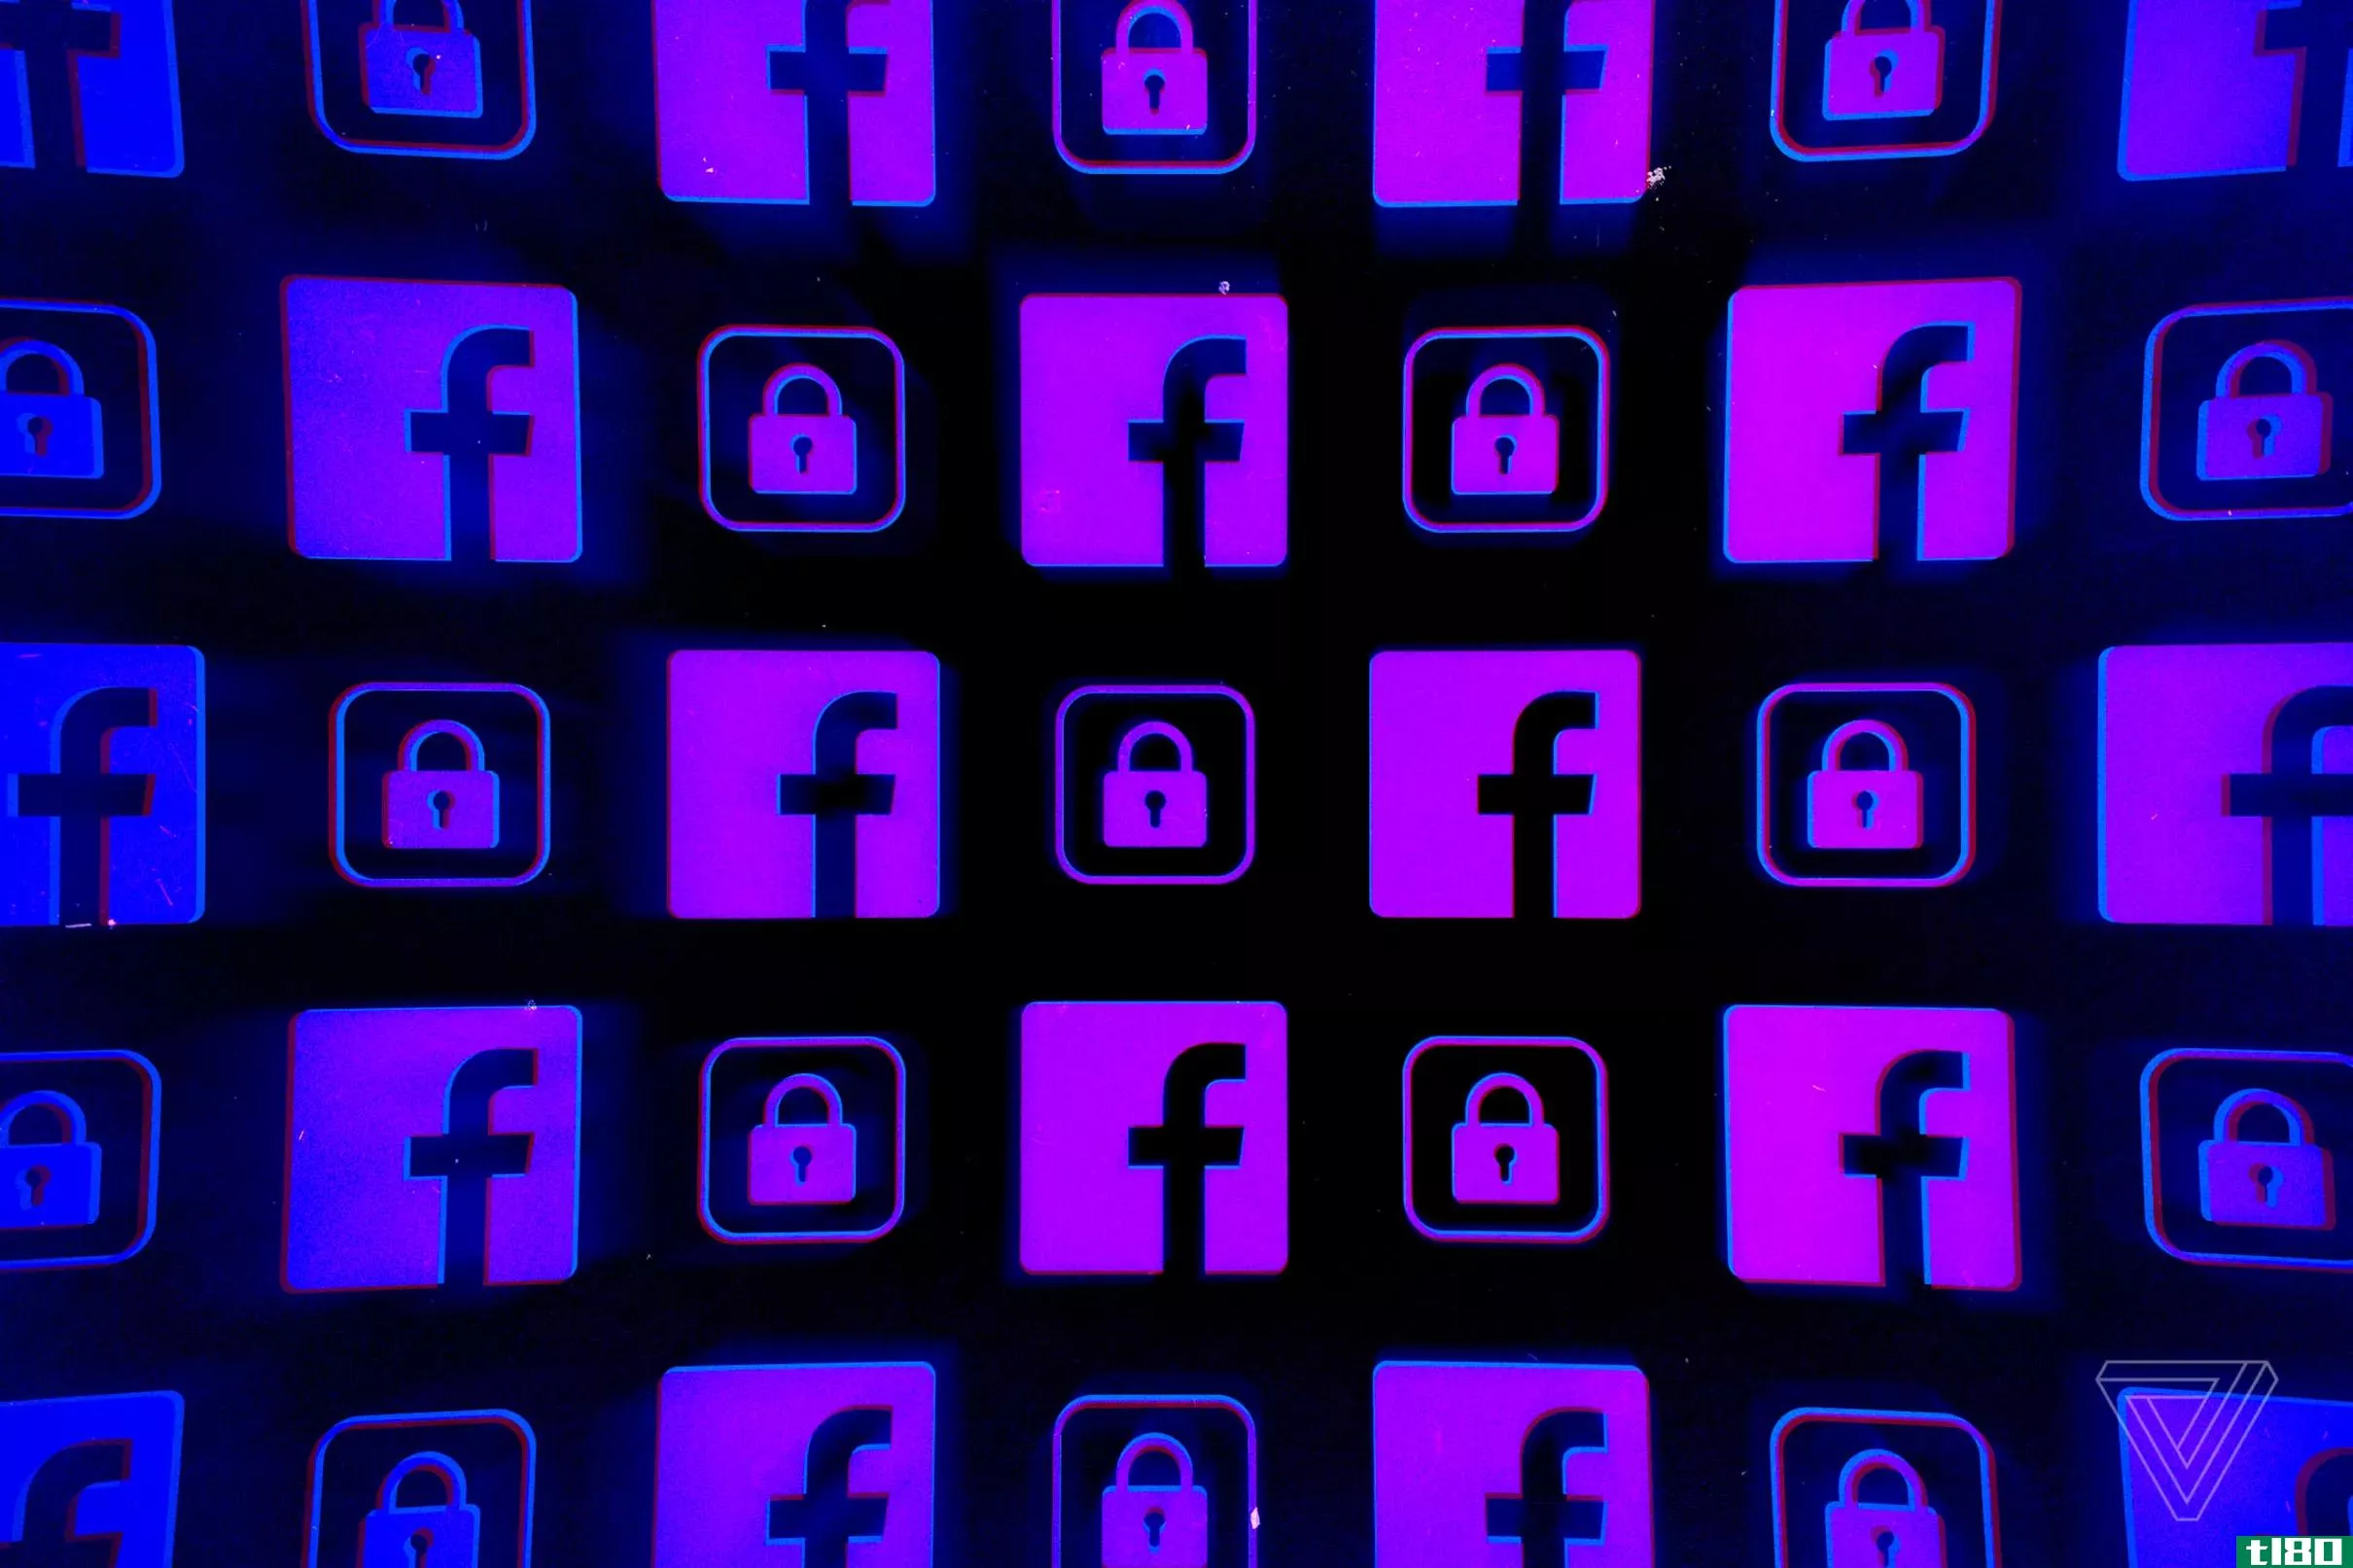 facebook称禁止使用“停止偷窃”这一短语